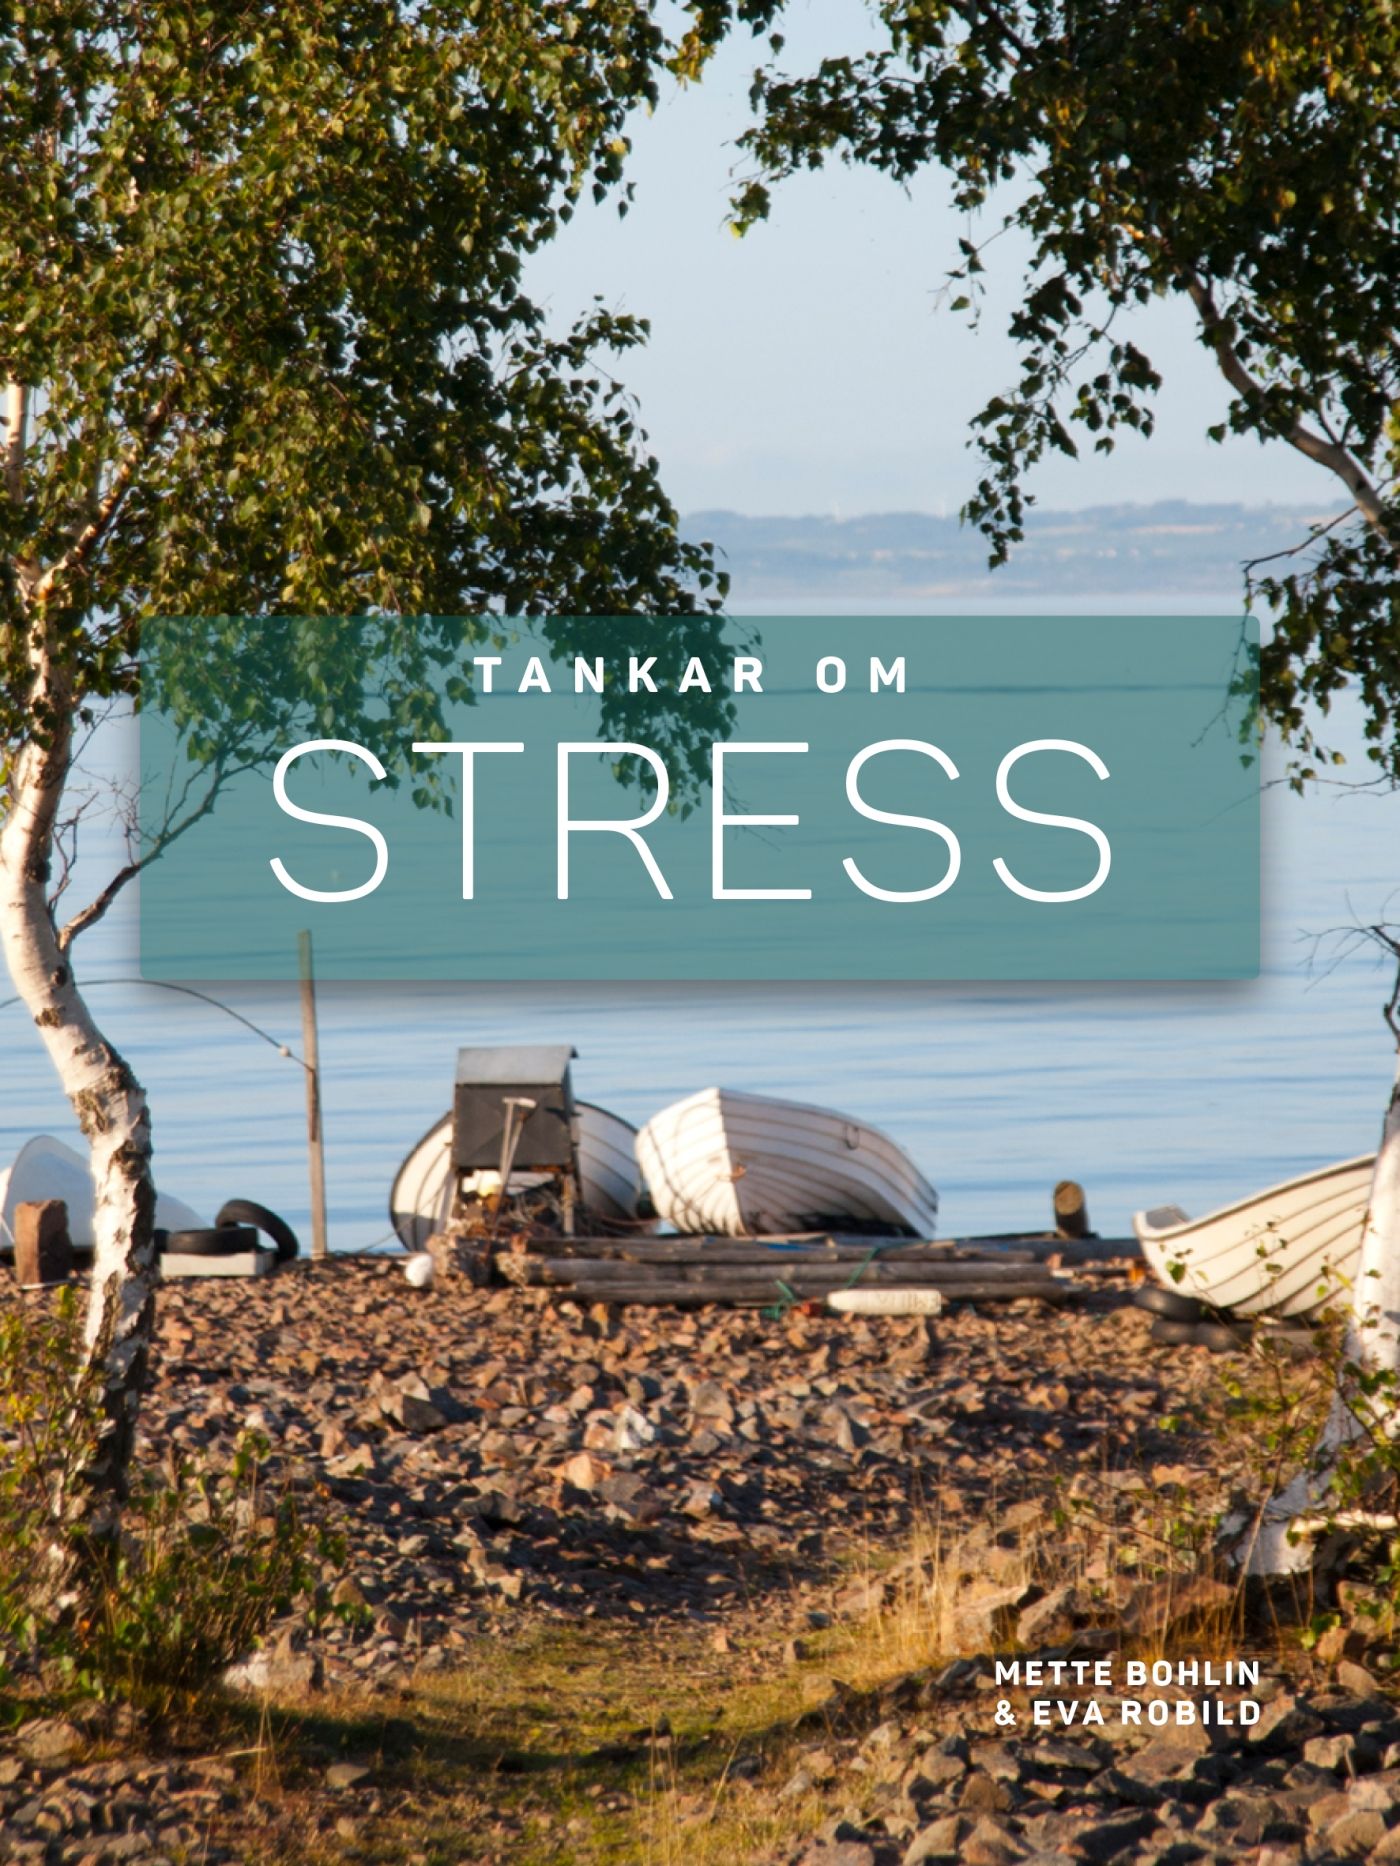 Tankar om Stress, eBook by Mette Bohlin, Eva Robild